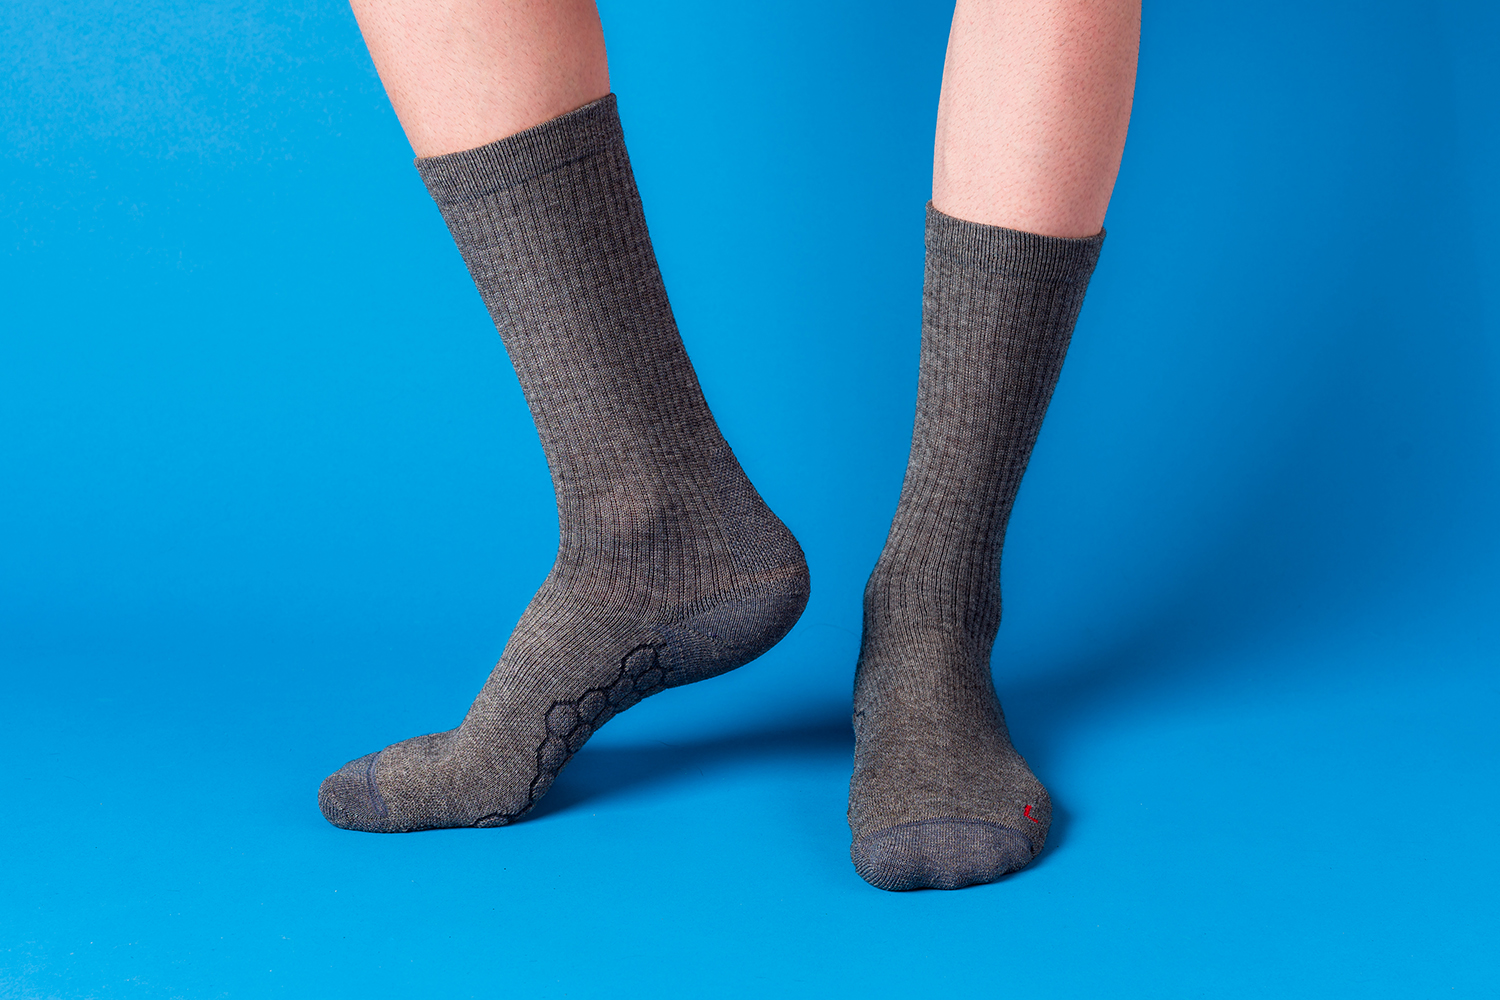  MERIWOOL Merino Wool Hiking Socks For Men And Women